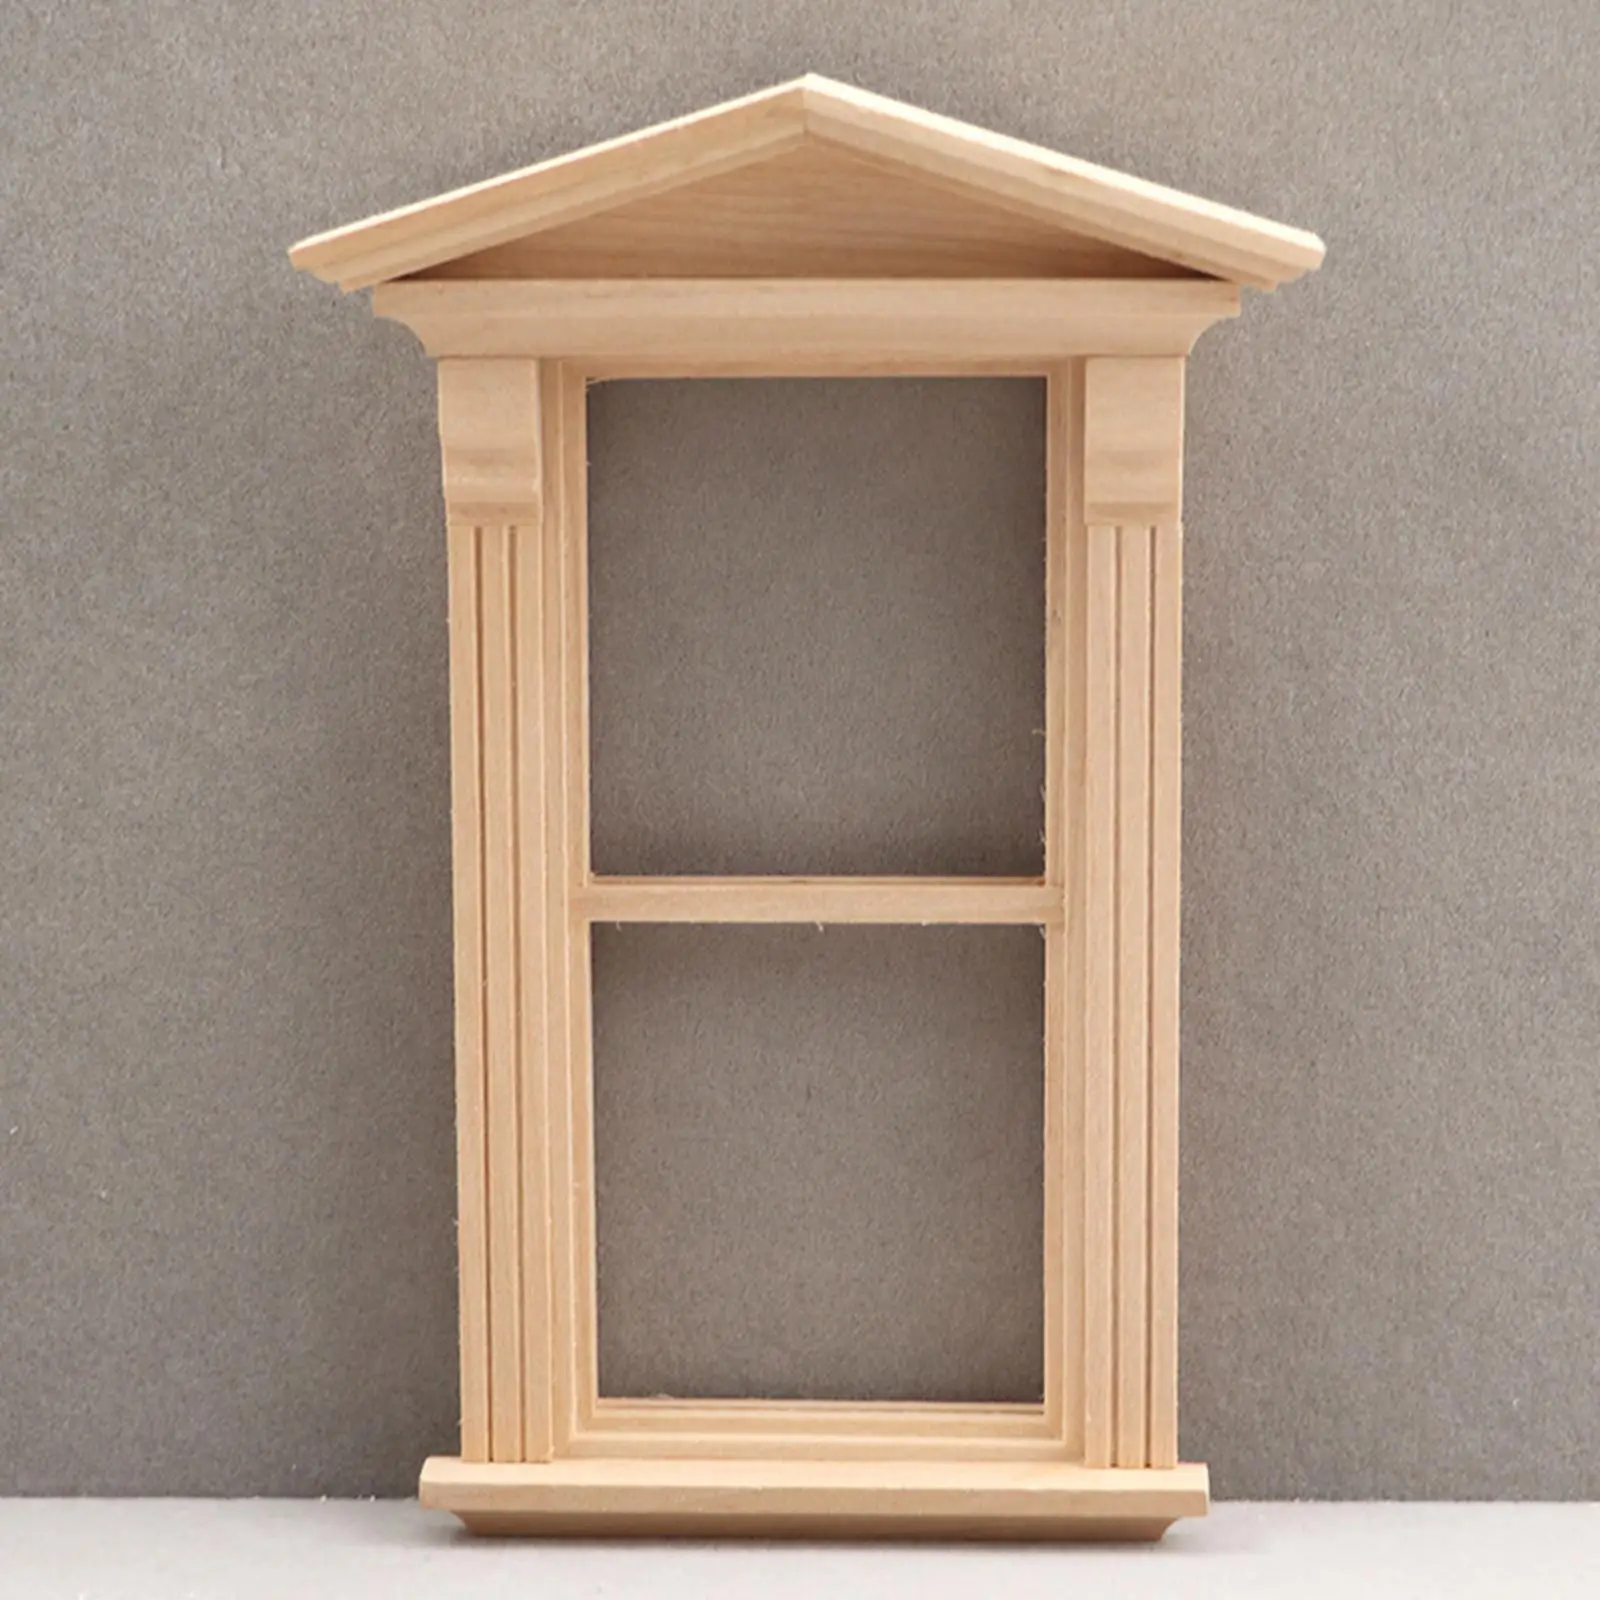 Mini Wooden Windowmodel Miniature Dollhouse Decoration Accessories for